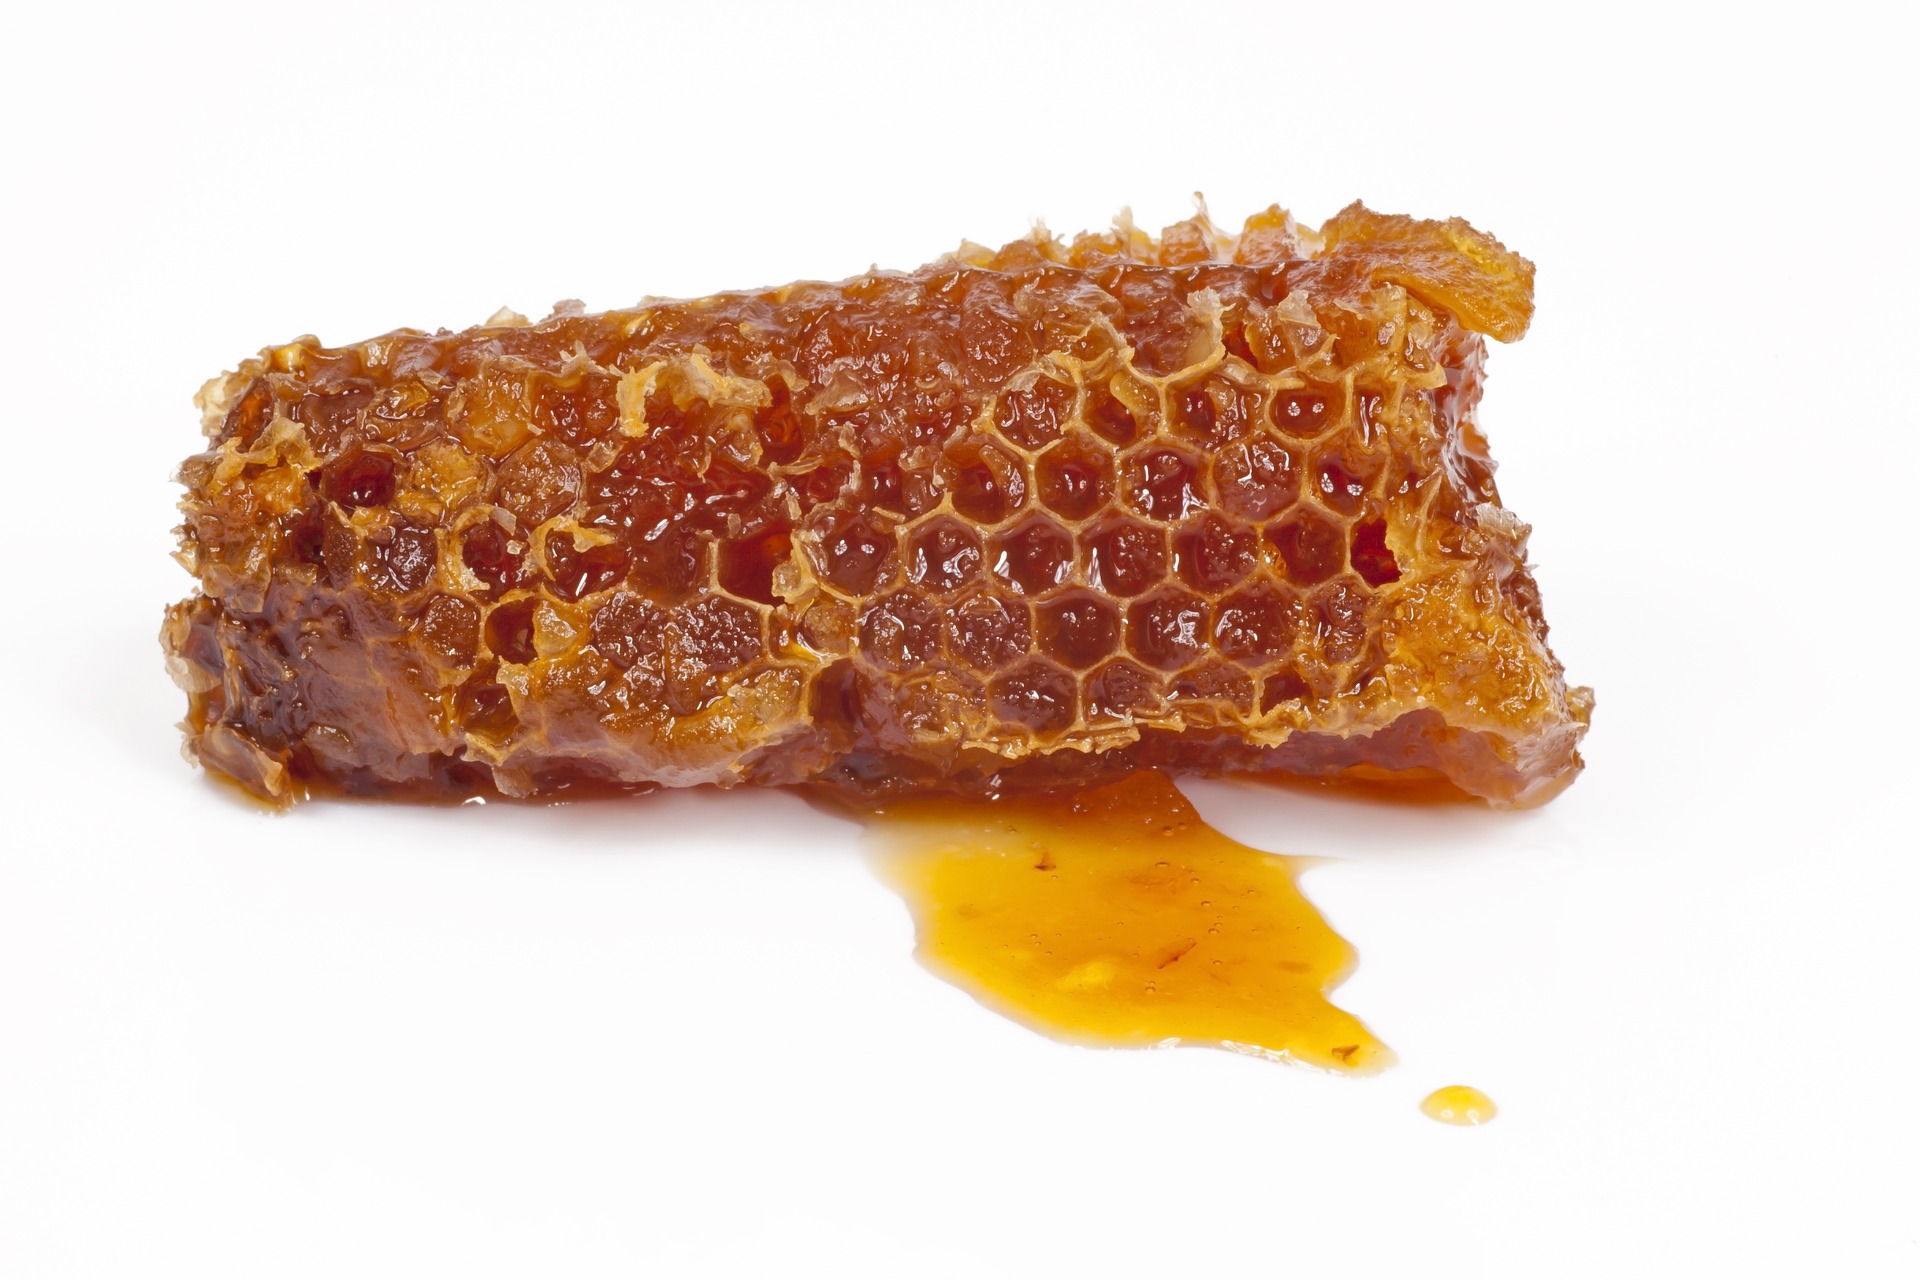 Honeycomb merges with Pollen Street